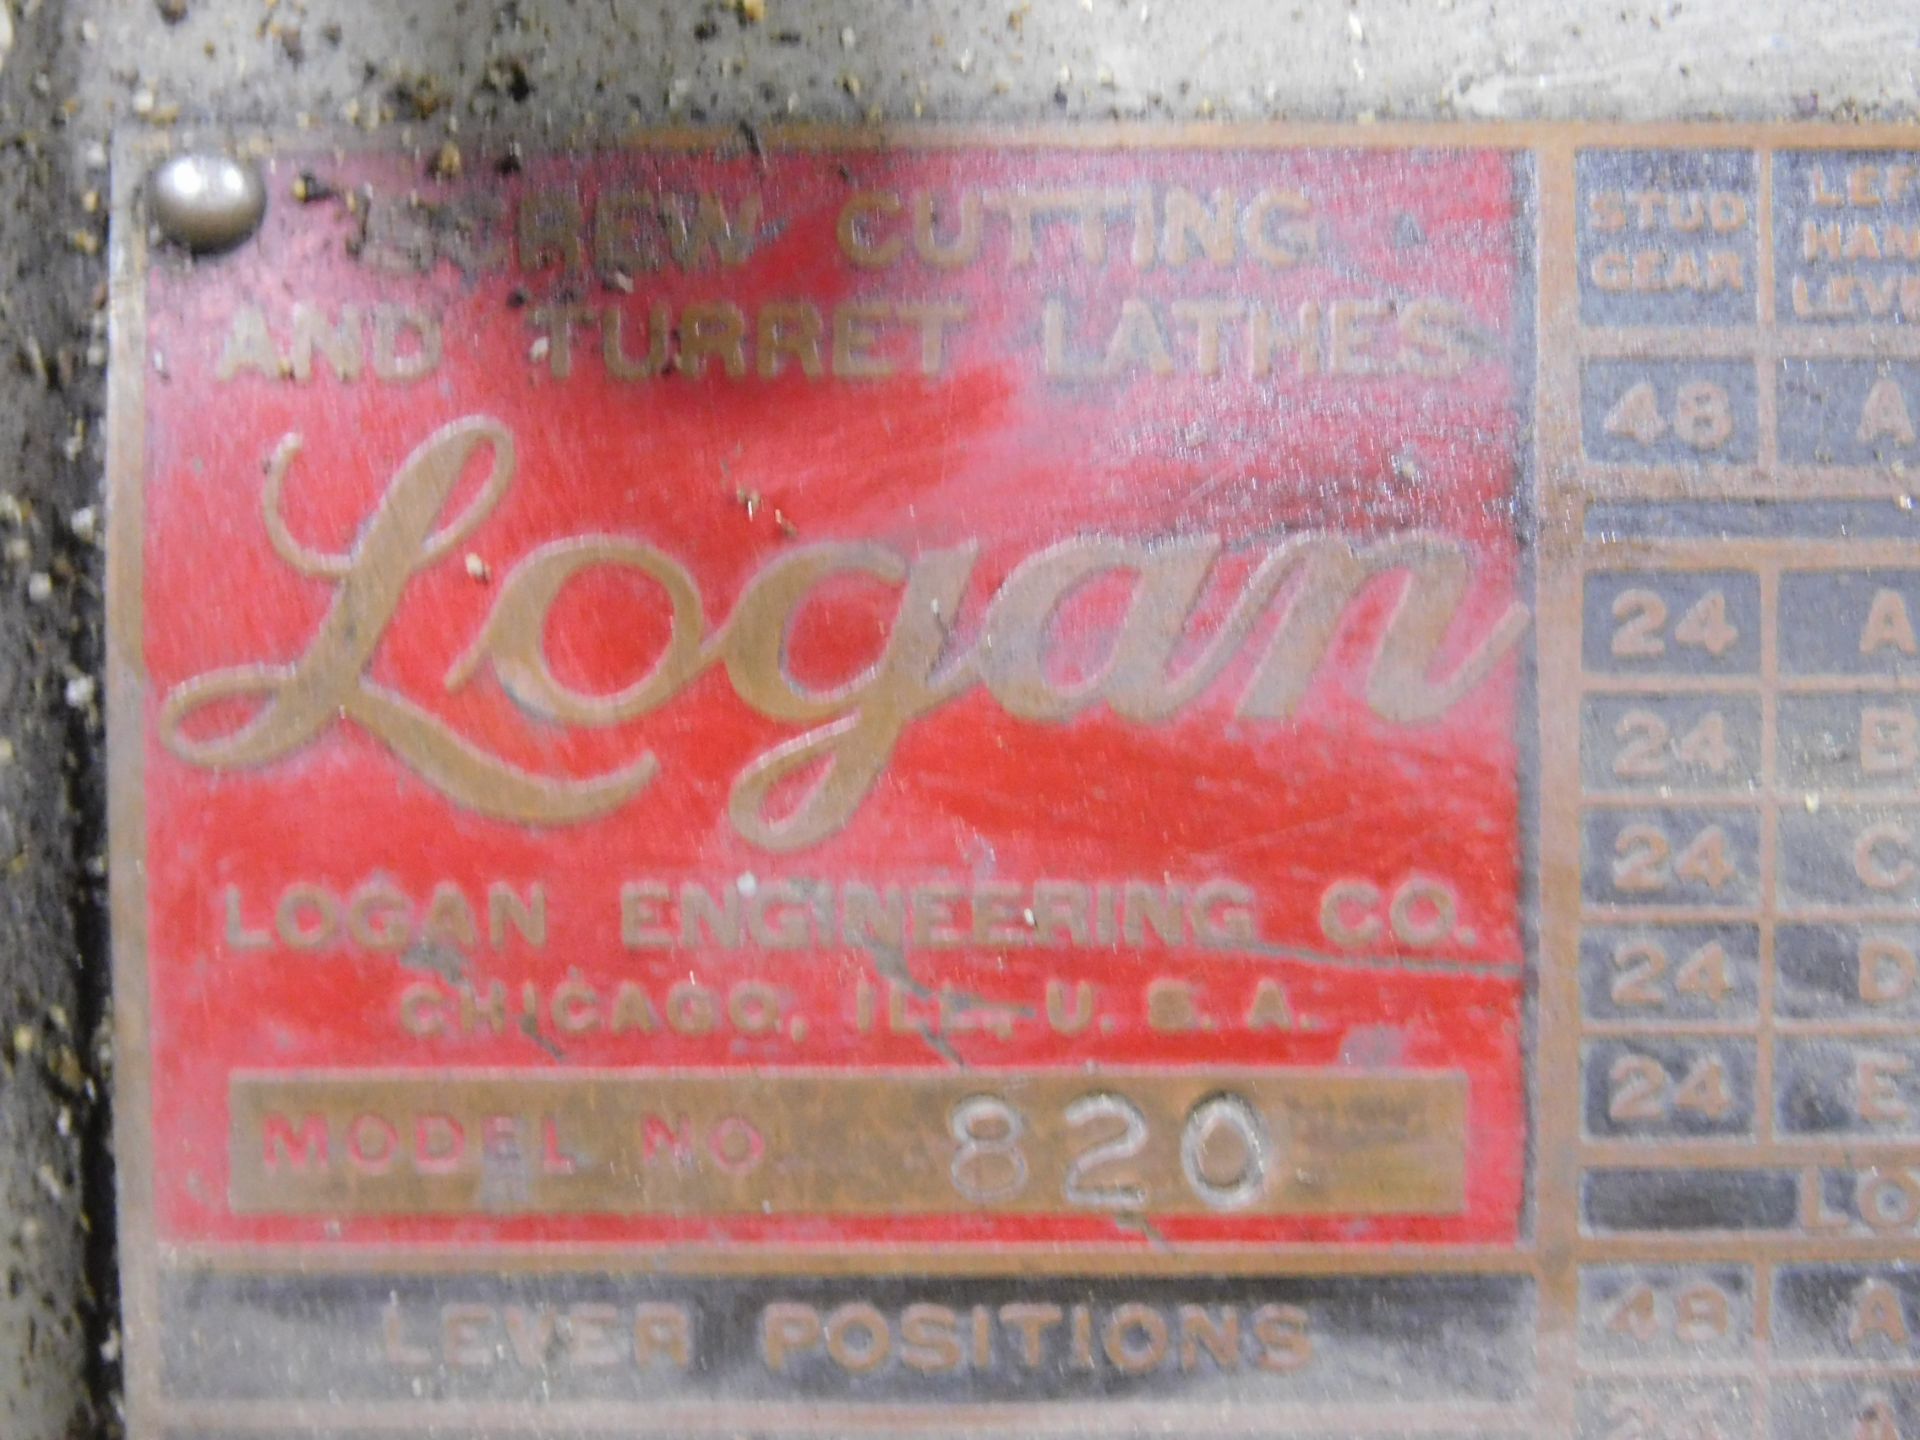 Logan 10" x 24" Lathe, SN 37501, 6" 3-Jaw Chuck, 6" 4-Jaw Chuck, 115V, 1 phs. - Image 8 of 12